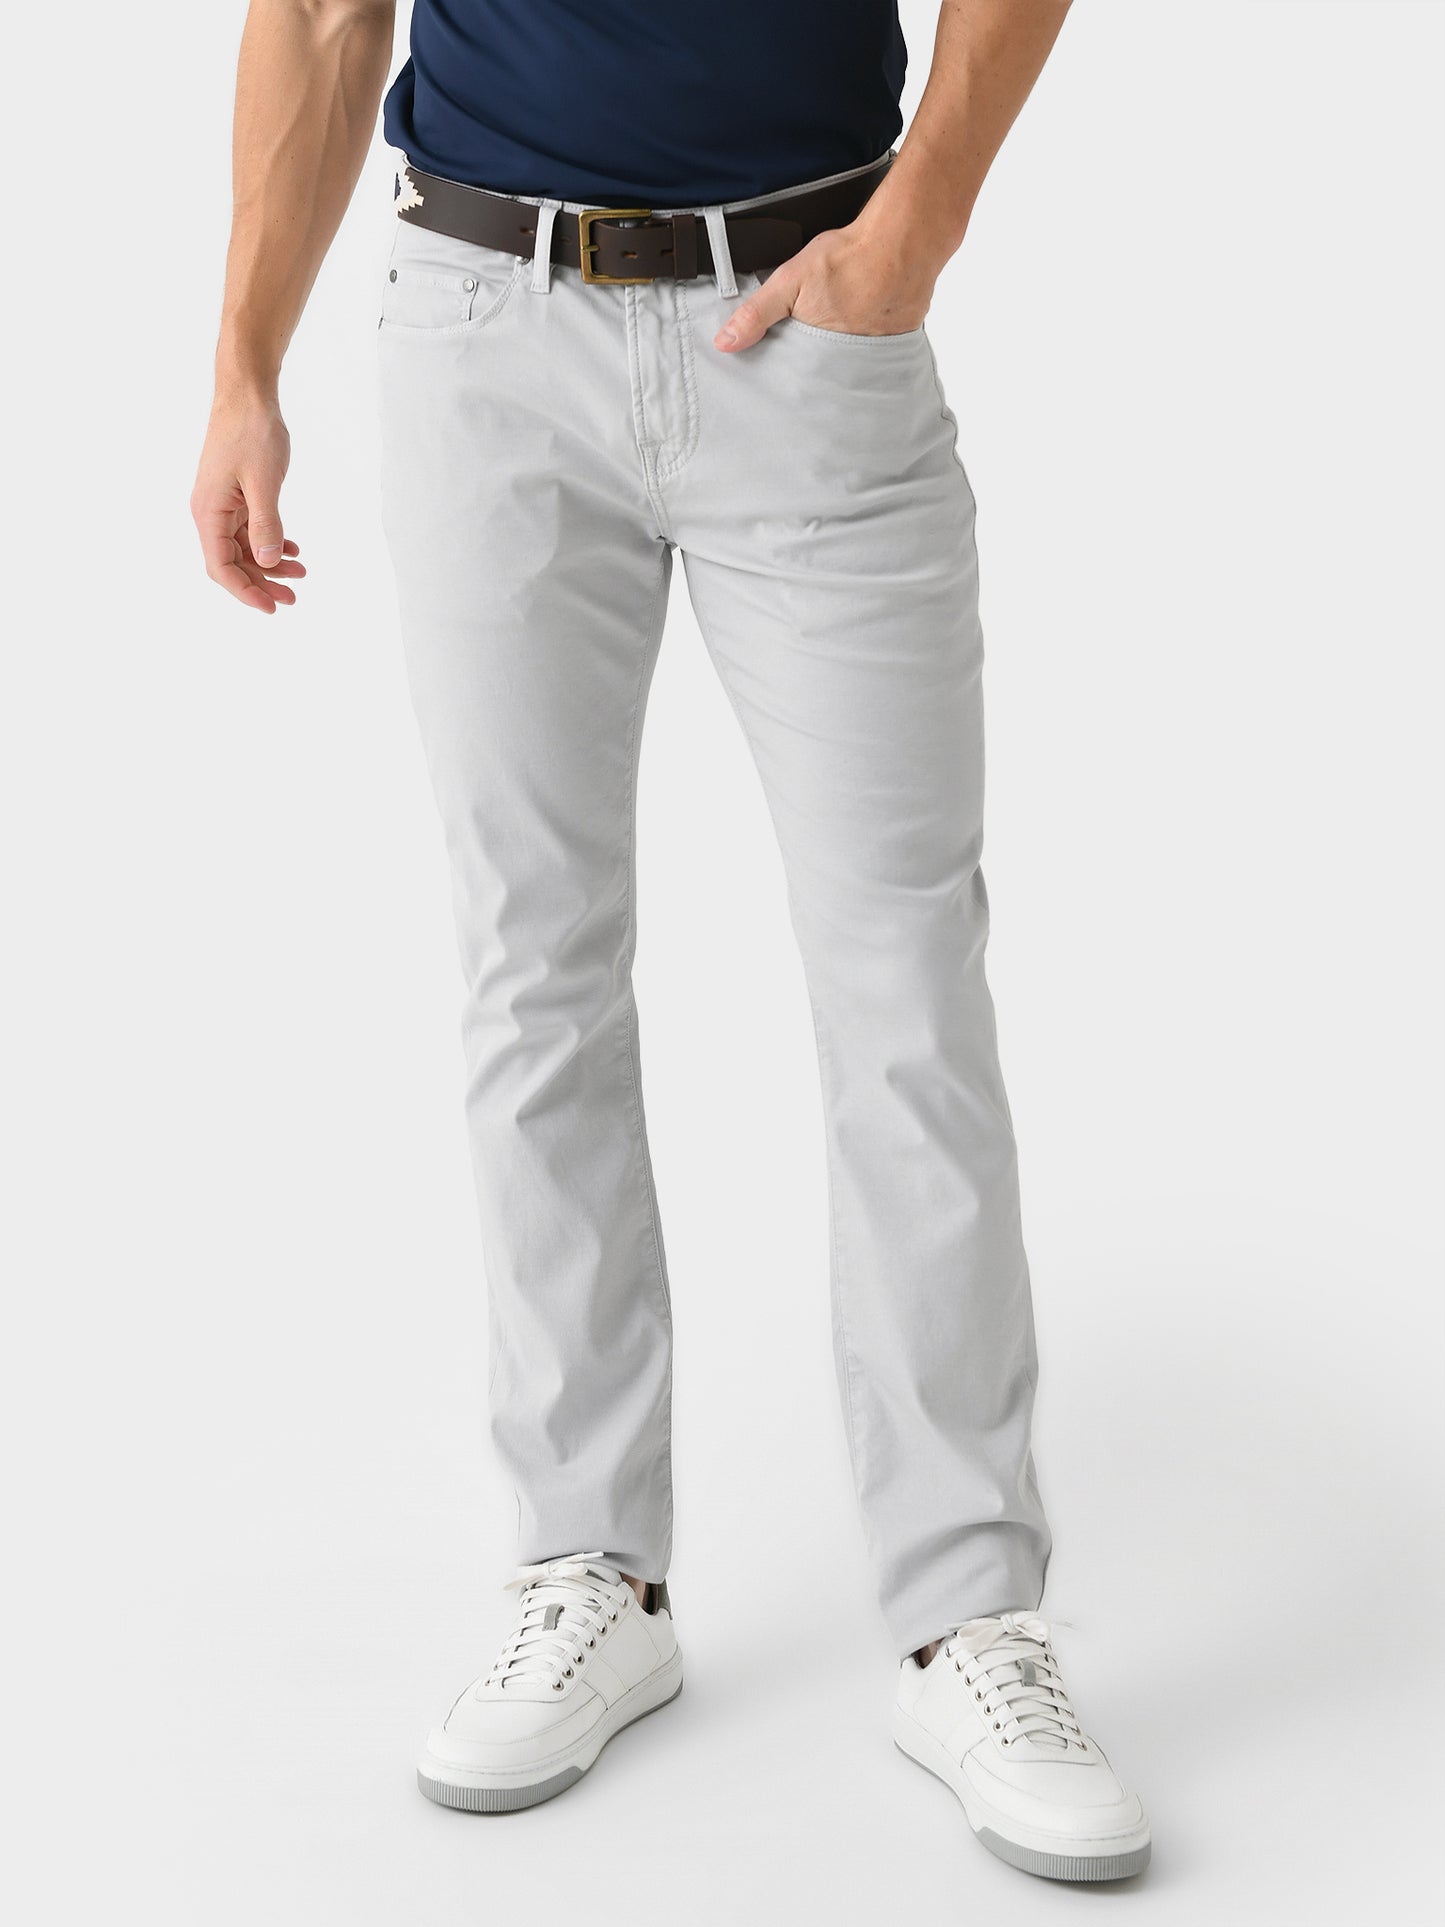 Johnnie-O Men's Atlas Lightweight Stretch 5-Pocket Jean